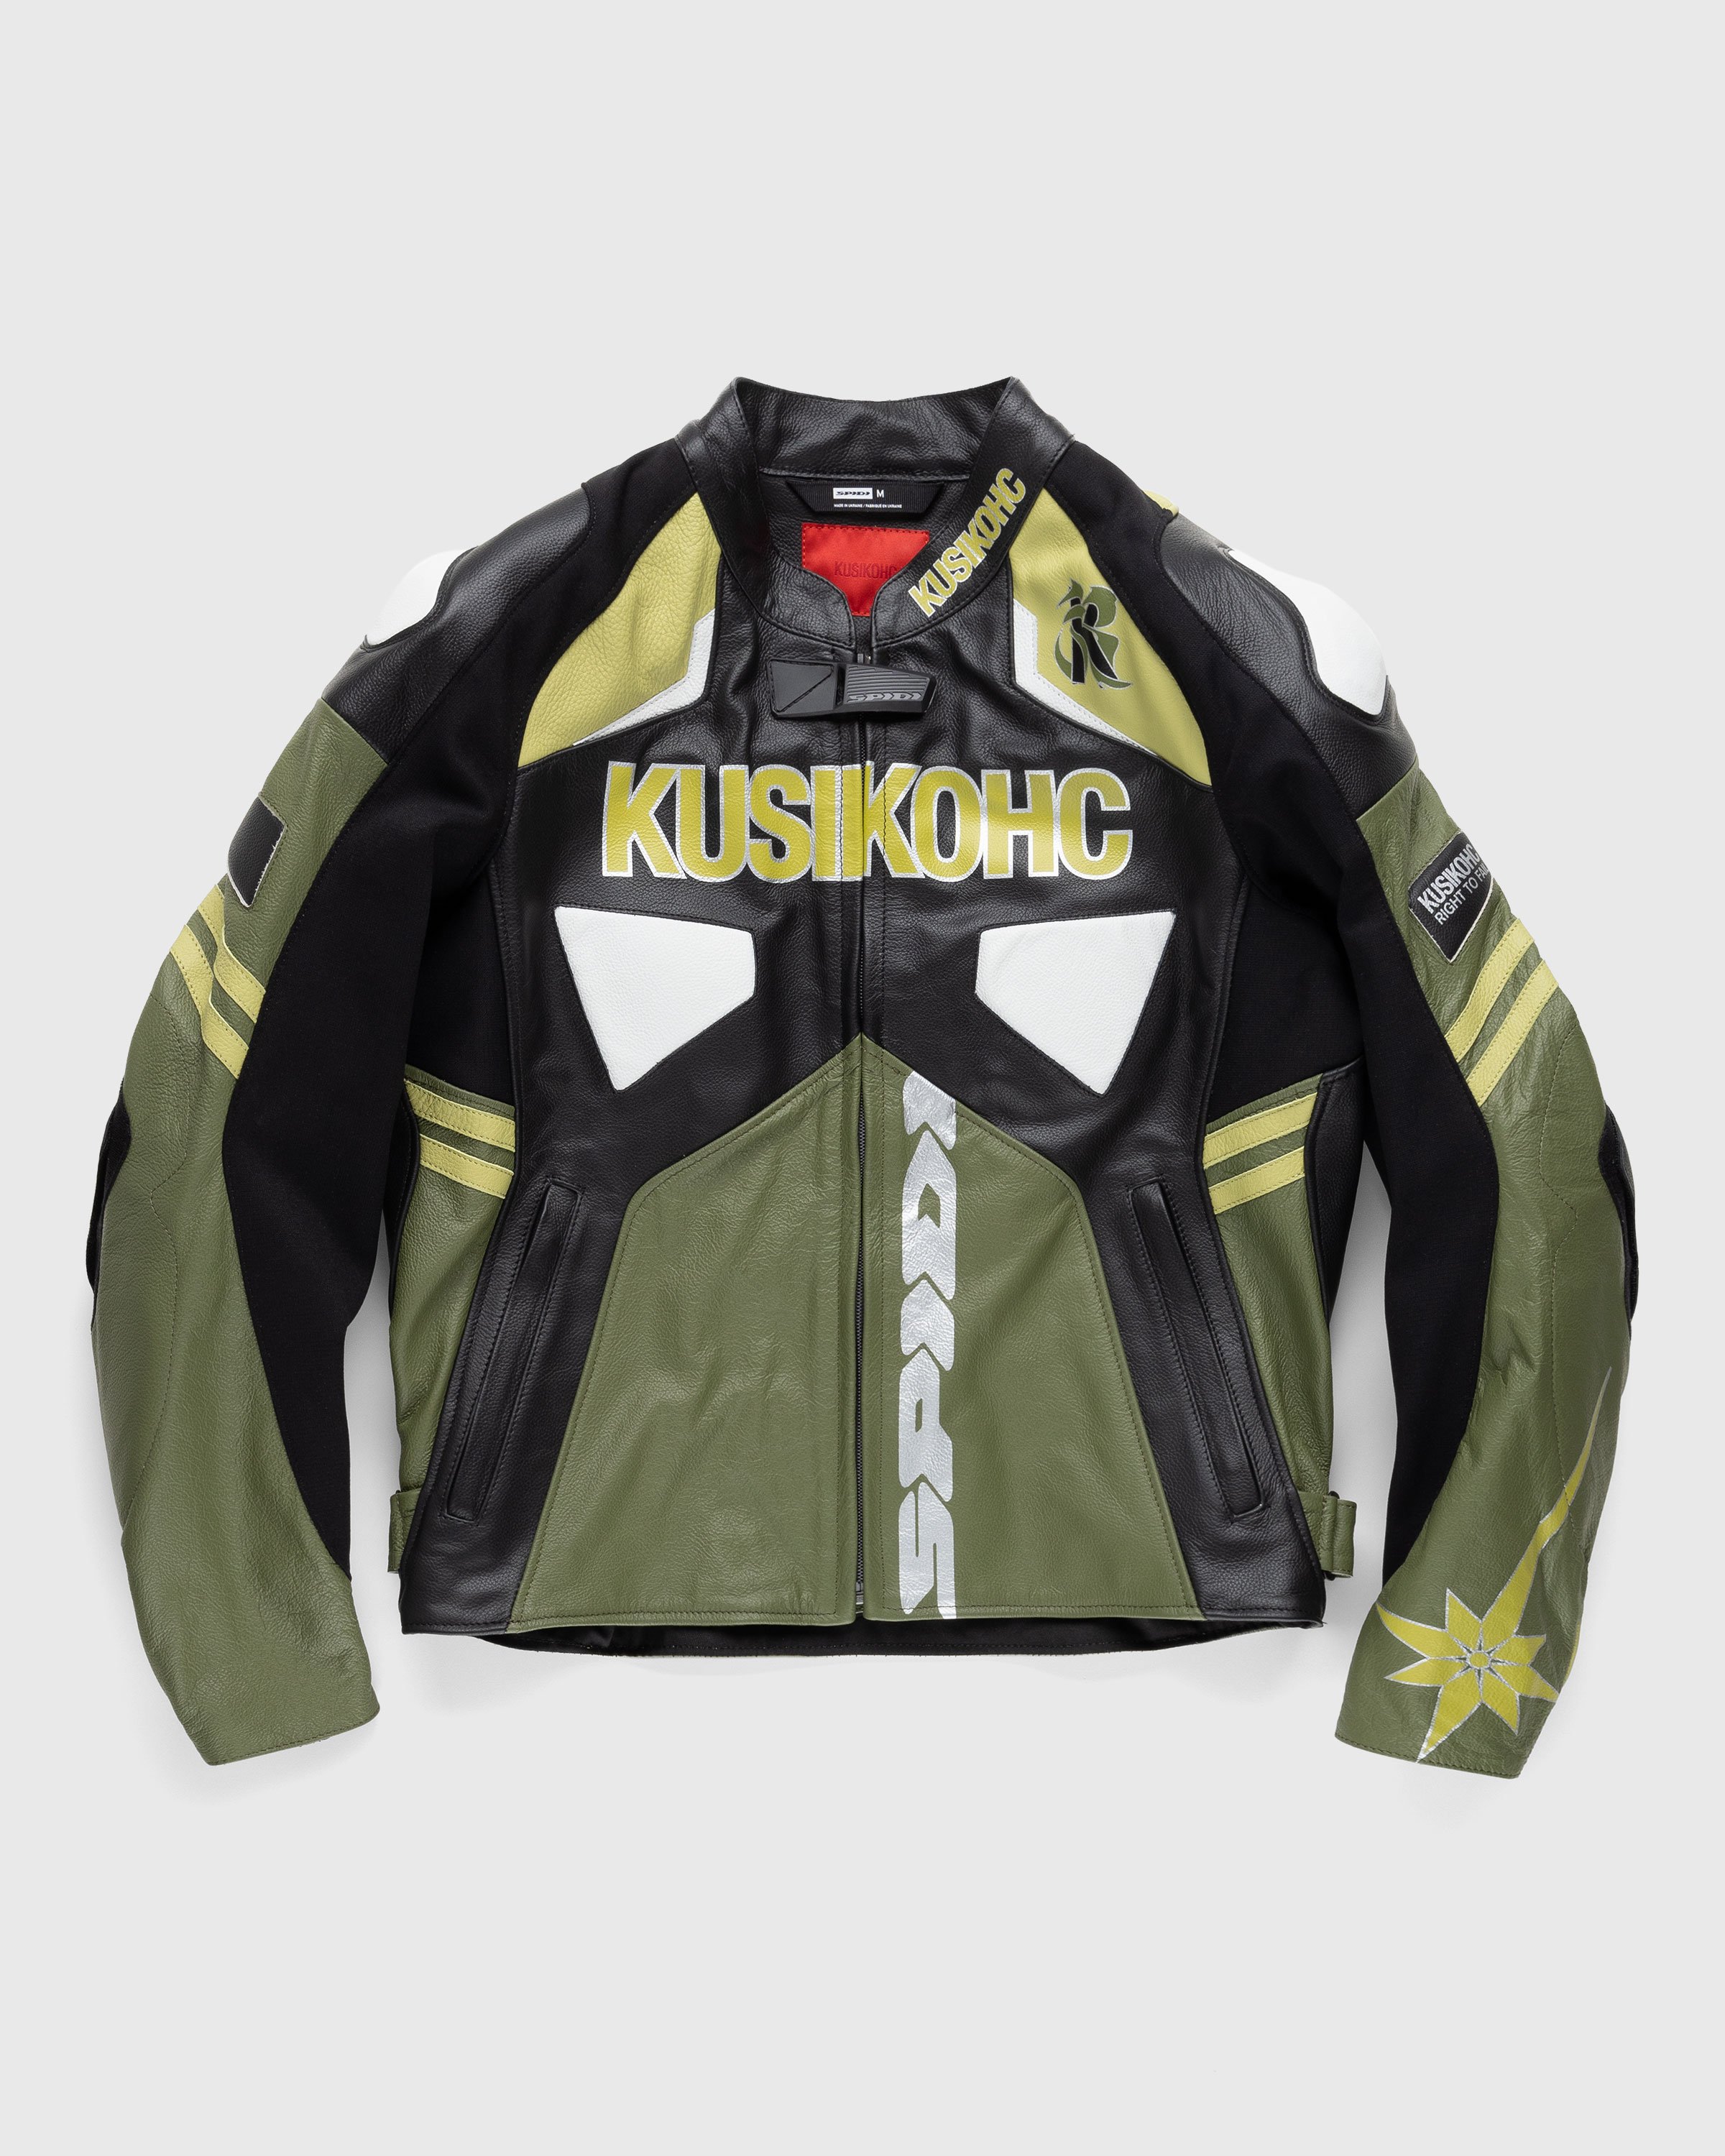 KUSIKOHC - Spidi Rider Jacket Black/Dark Green - Clothing - Multi - Image 1